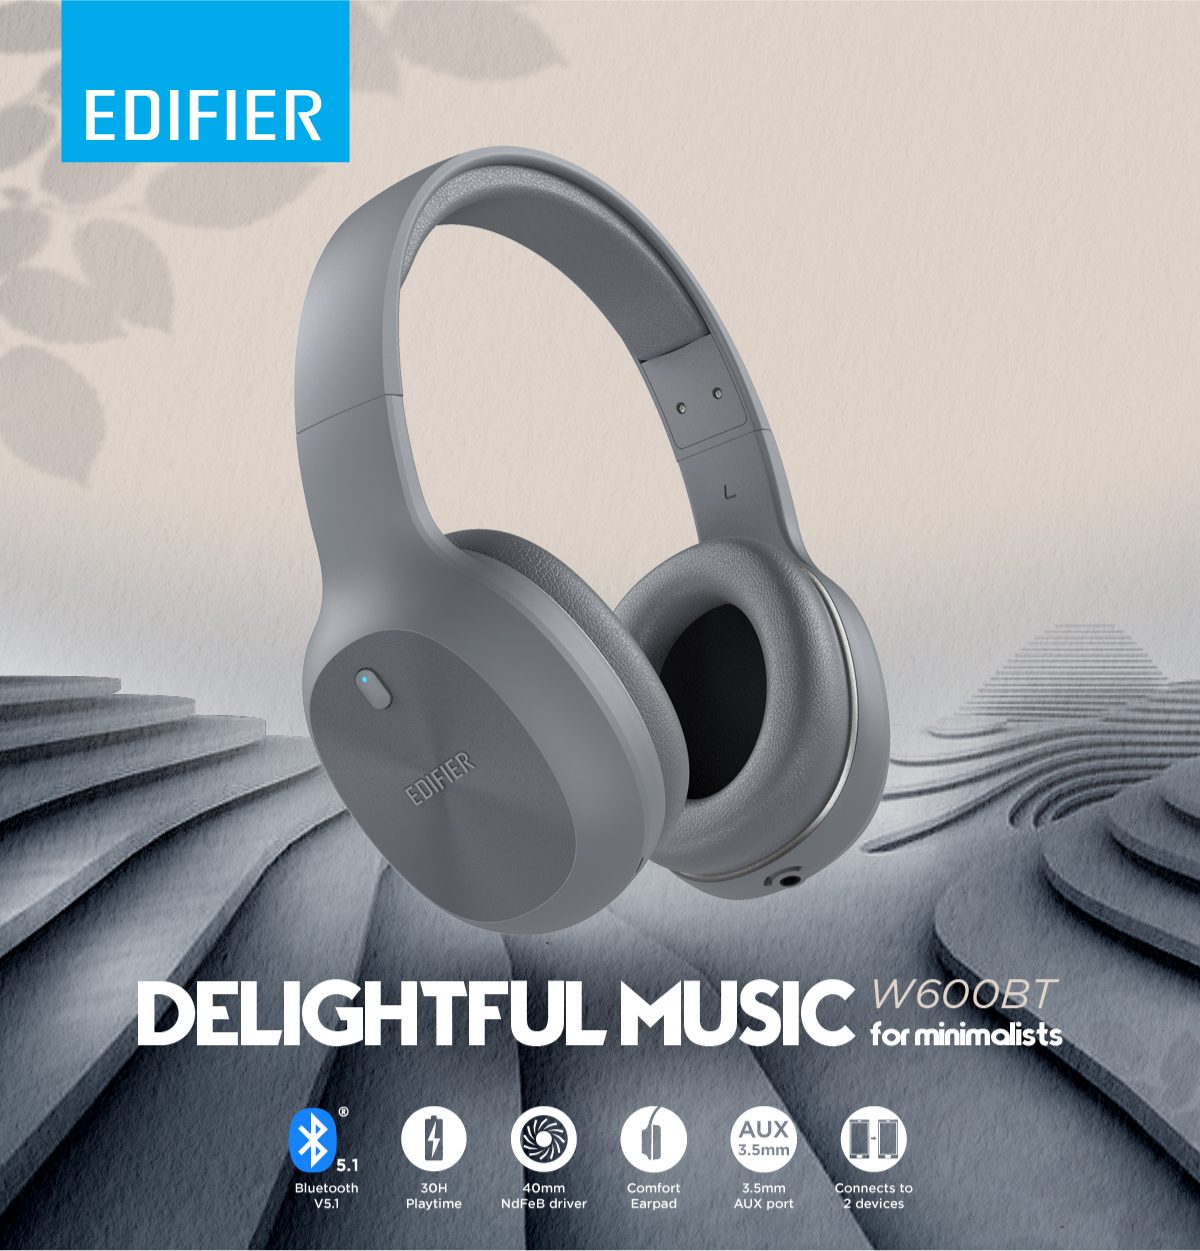 edifier w600bt bluetooth stereo headphones 1